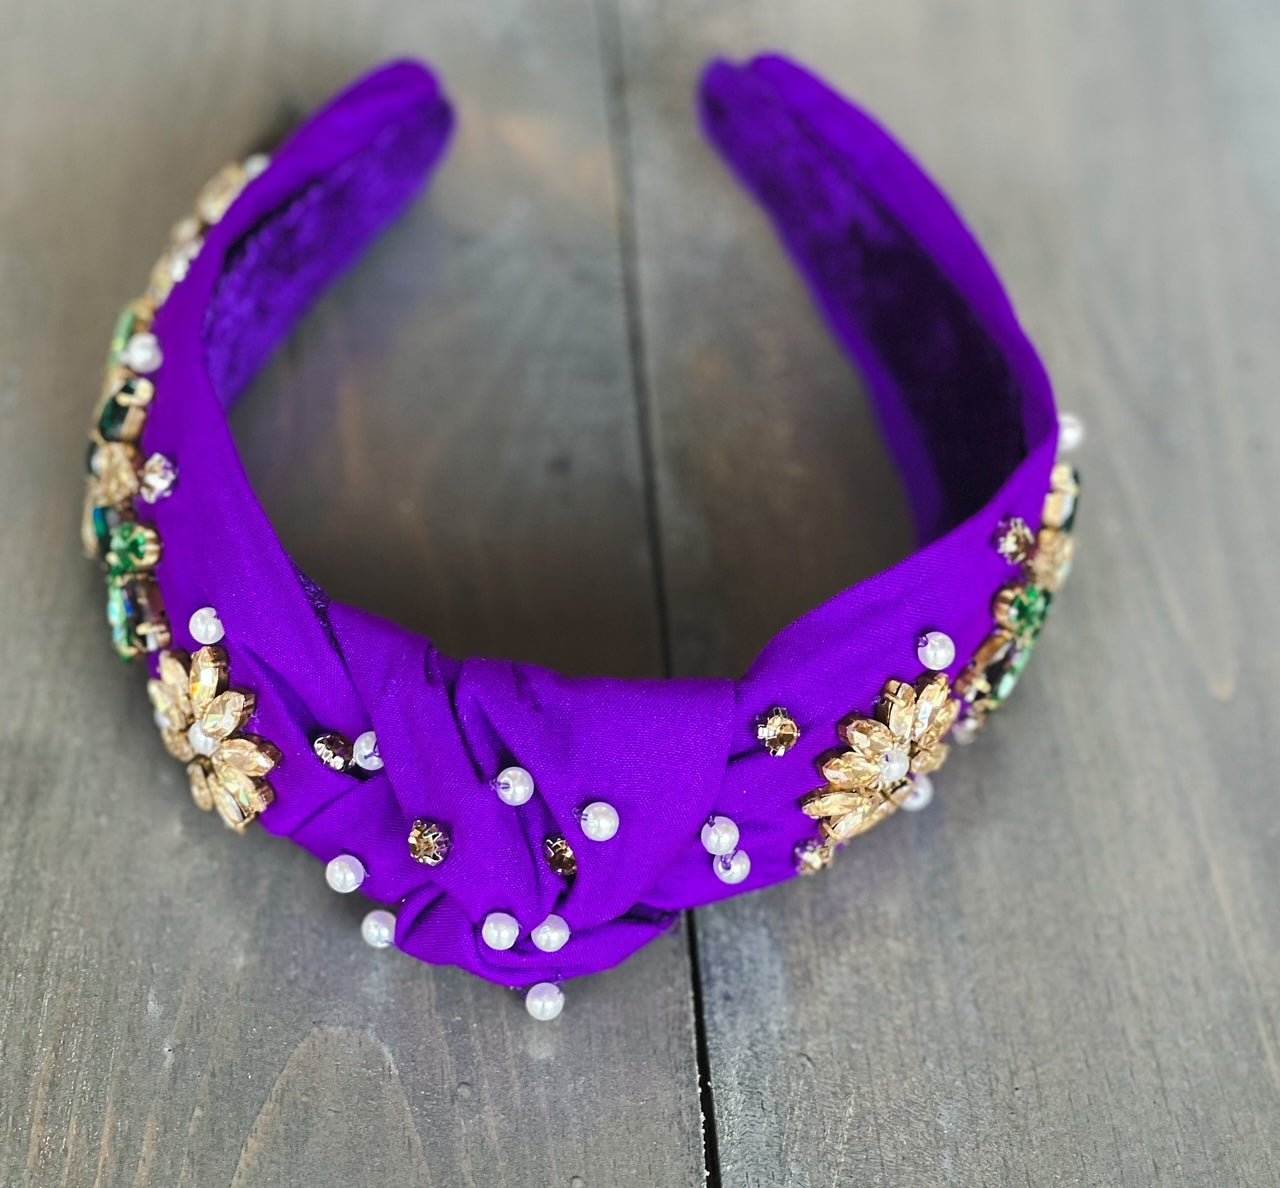 Mardi Gras Jeweled Hand Sewn Top Knot Purple Headband